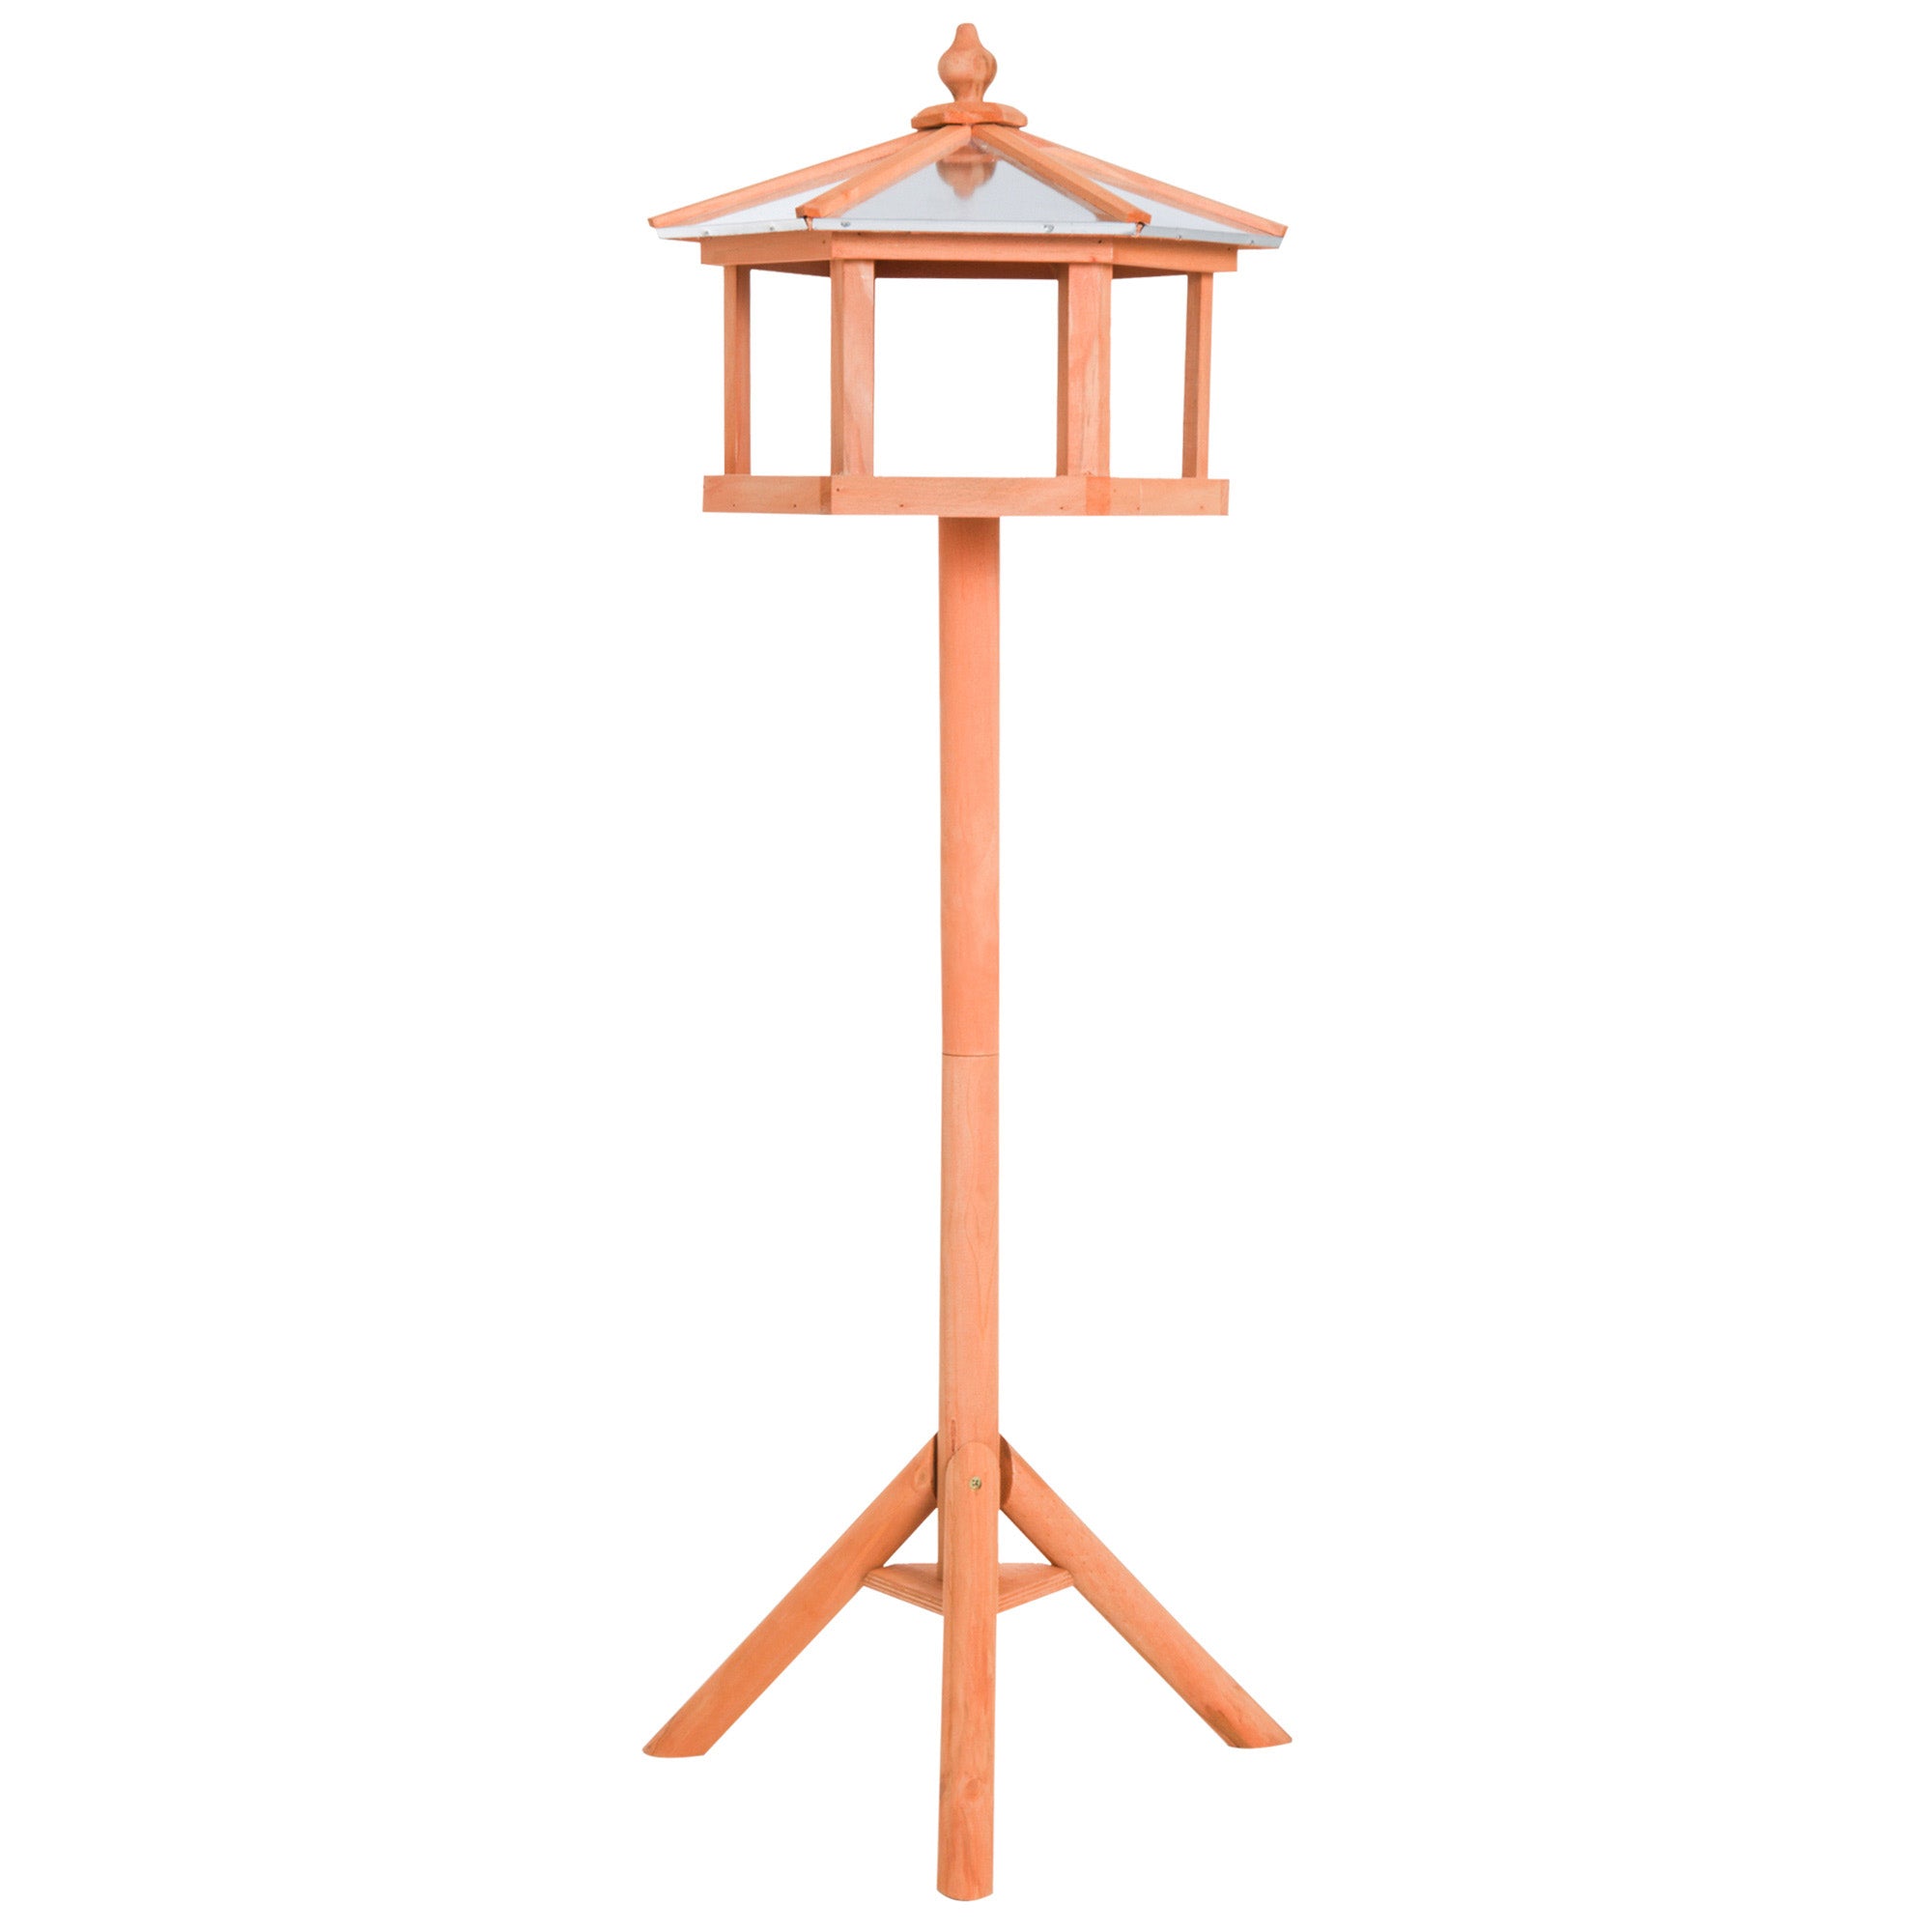 Wooden Bird Table Feeder & Stand for Gardens, PawHut,